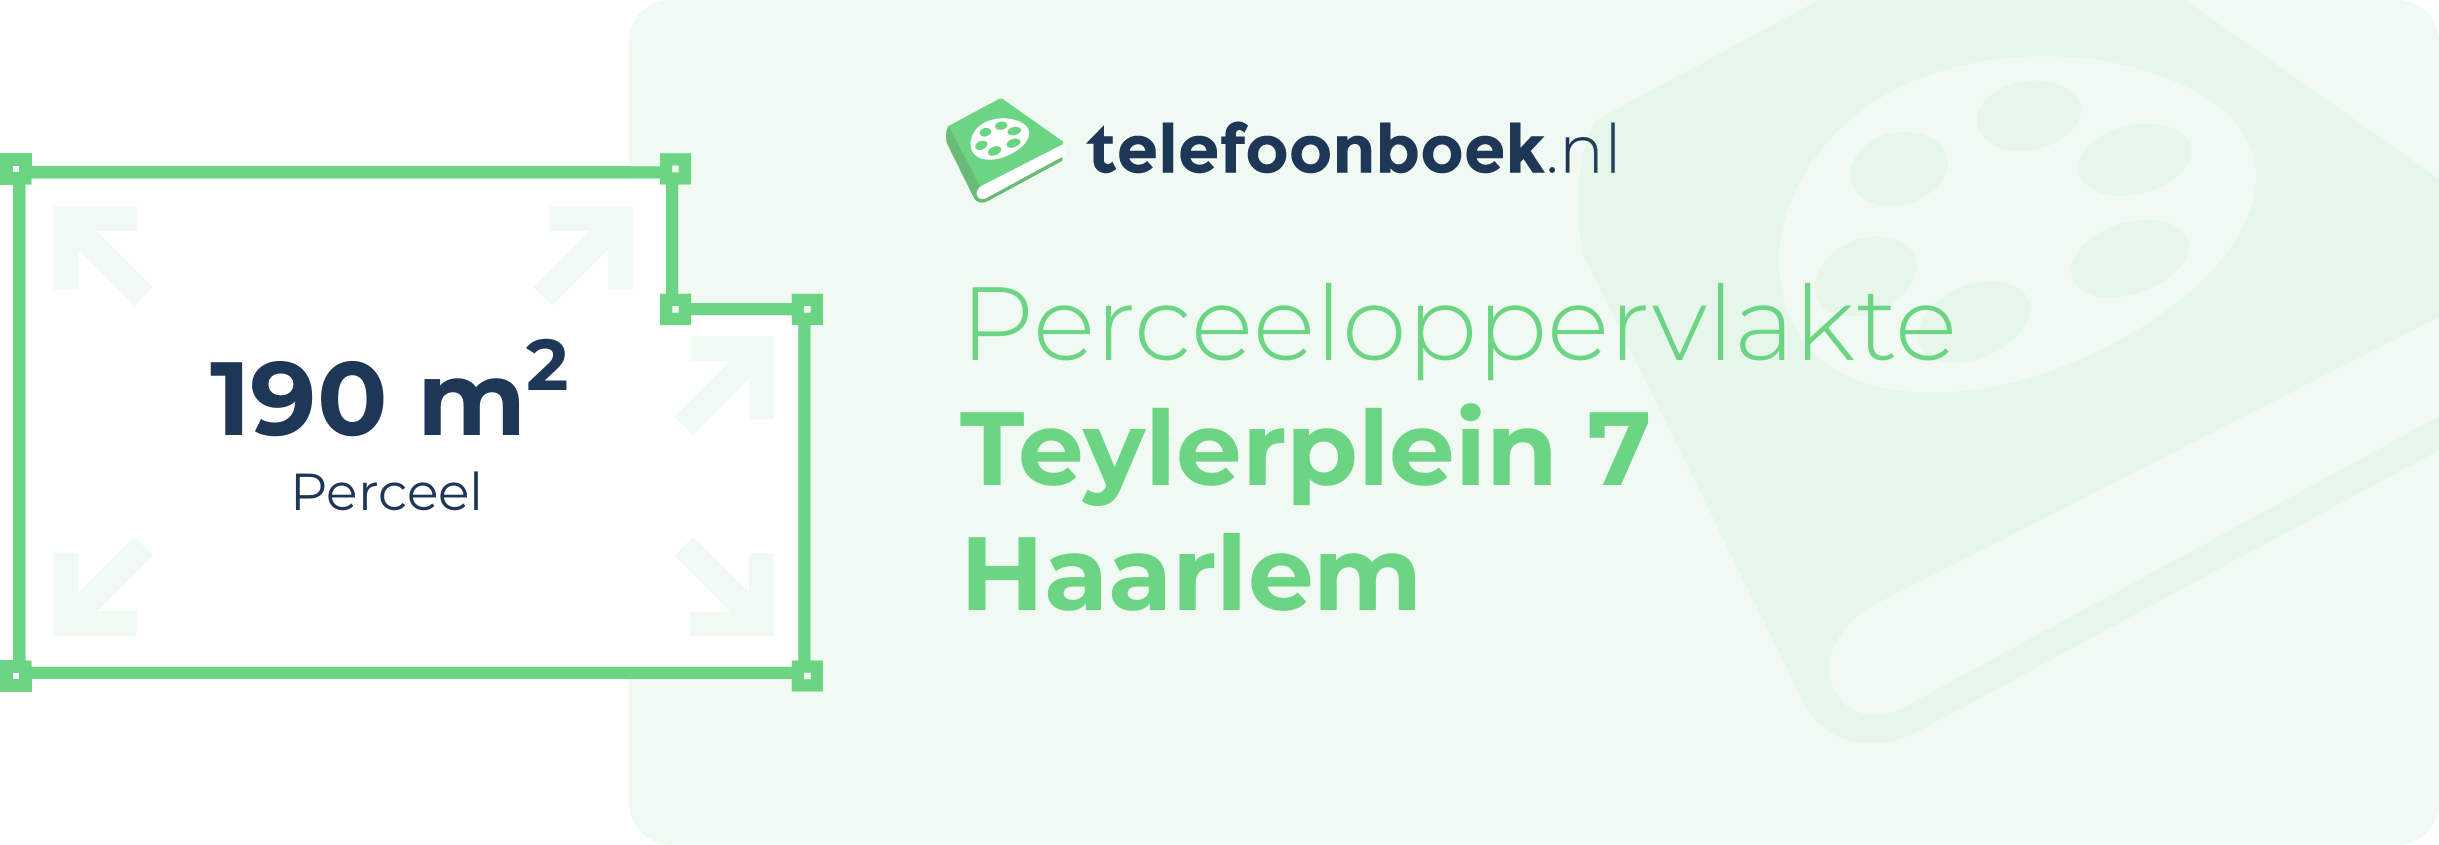 Perceeloppervlakte Teylerplein 7 Haarlem